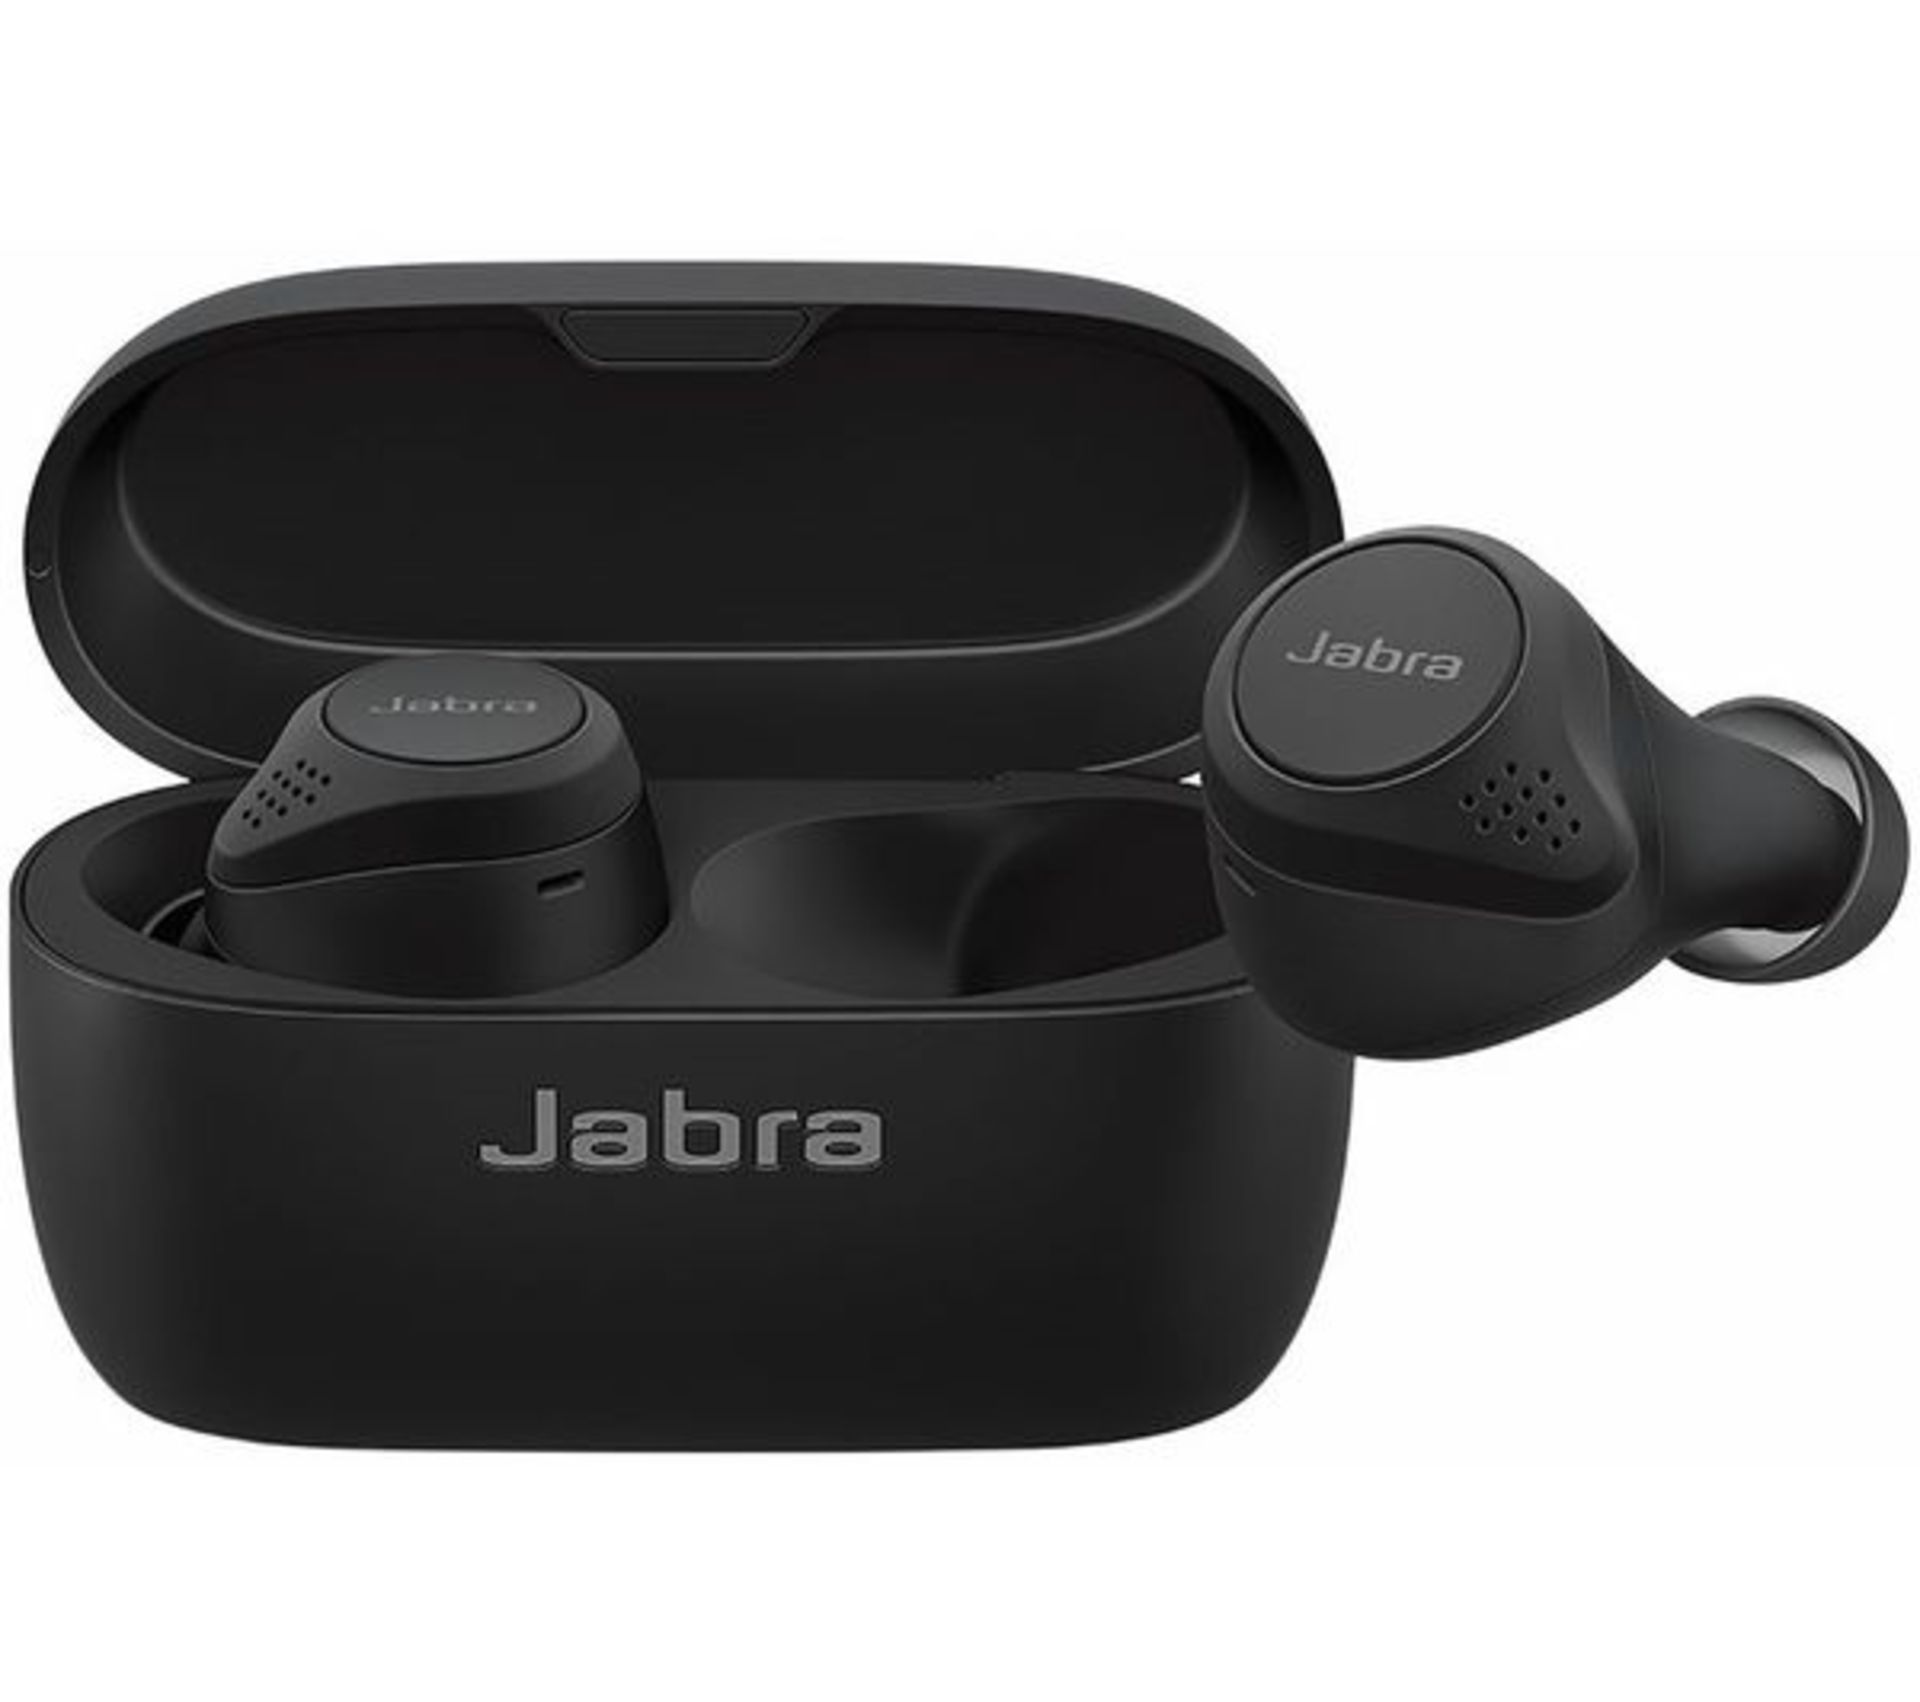 new jabra elite 75t wireless earbuds black rrp £189.99